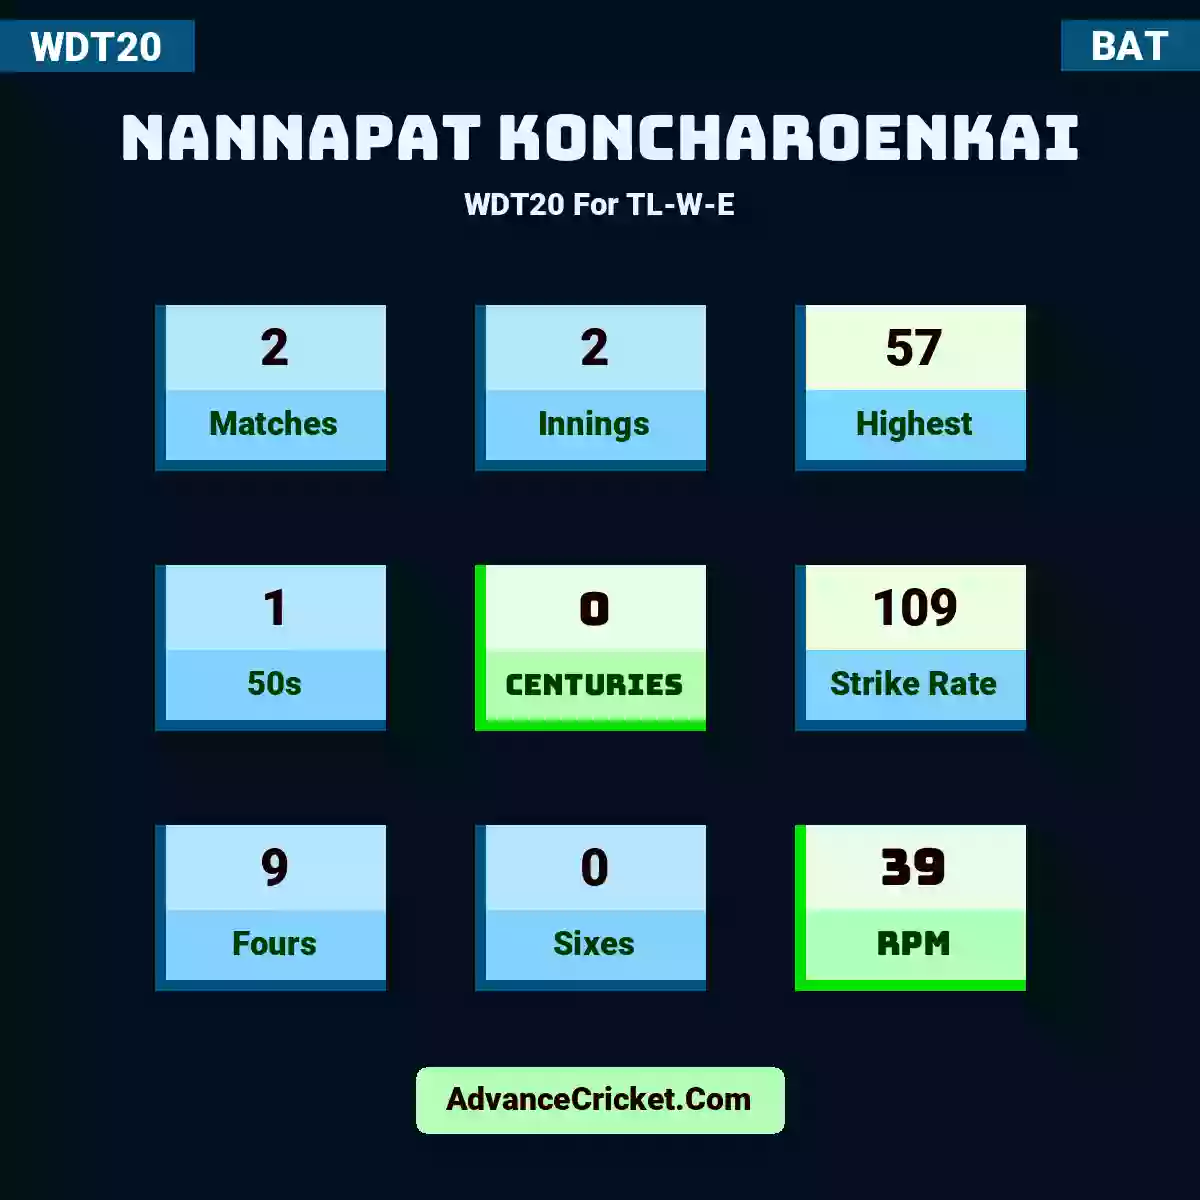 Nannapat Koncharoenkai WDT20  For TL-W-E, Nannapat Koncharoenkai played 2 matches, scored 57 runs as highest, 1 half-centuries, and 0 centuries, with a strike rate of 109. N.Koncharoenkai hit 9 fours and 0 sixes, with an RPM of 39.